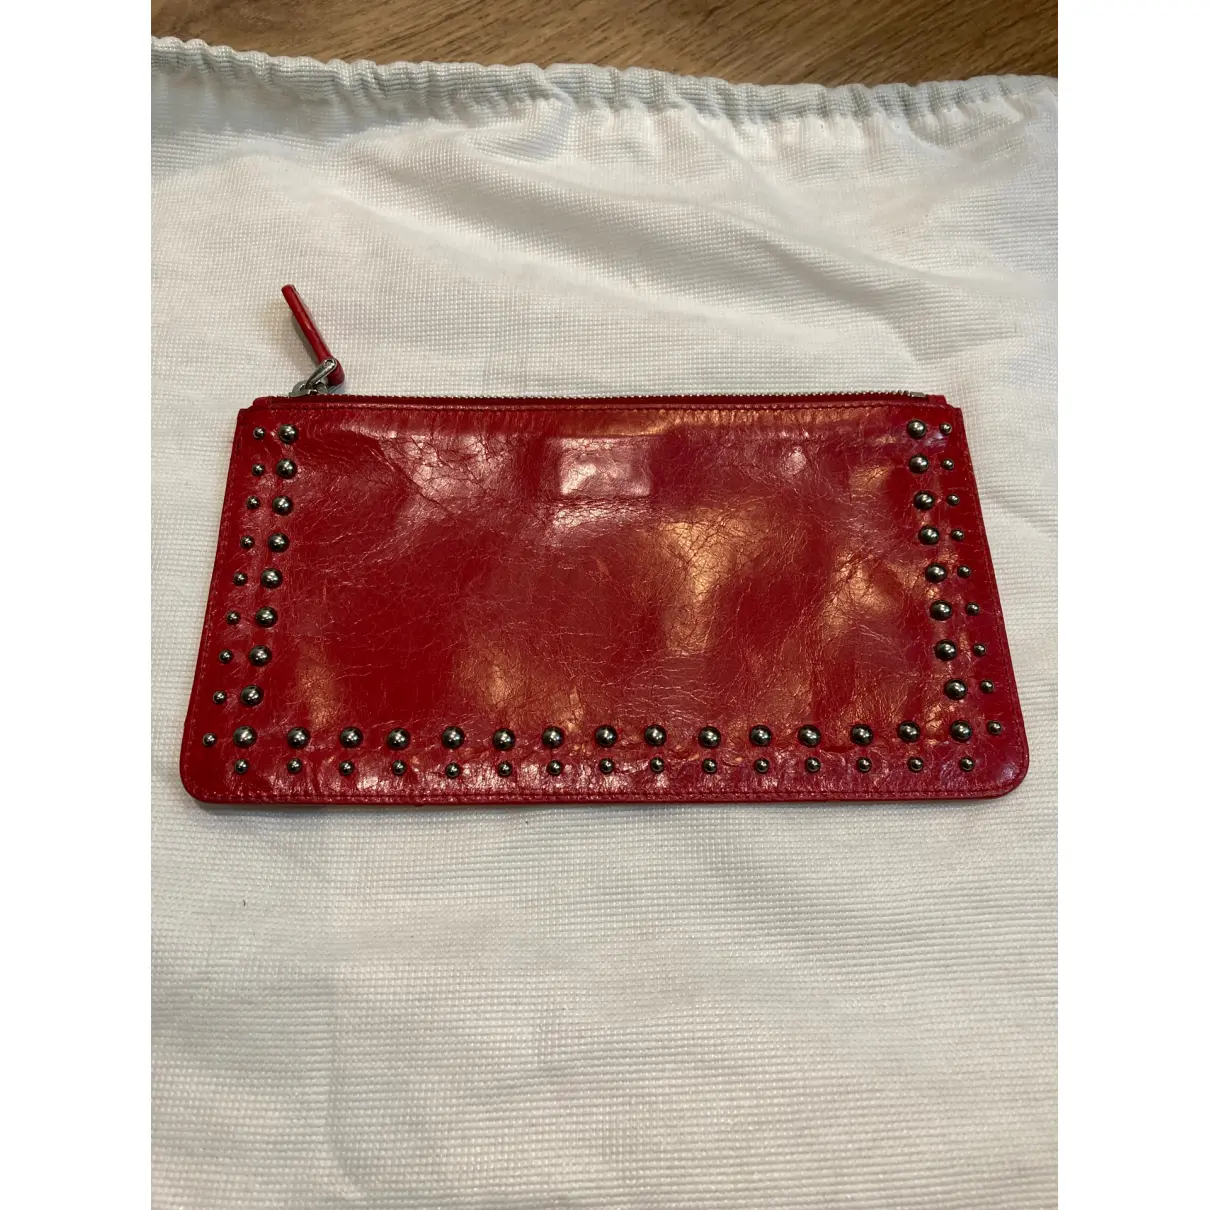 Buy Prada Patent leather purse online